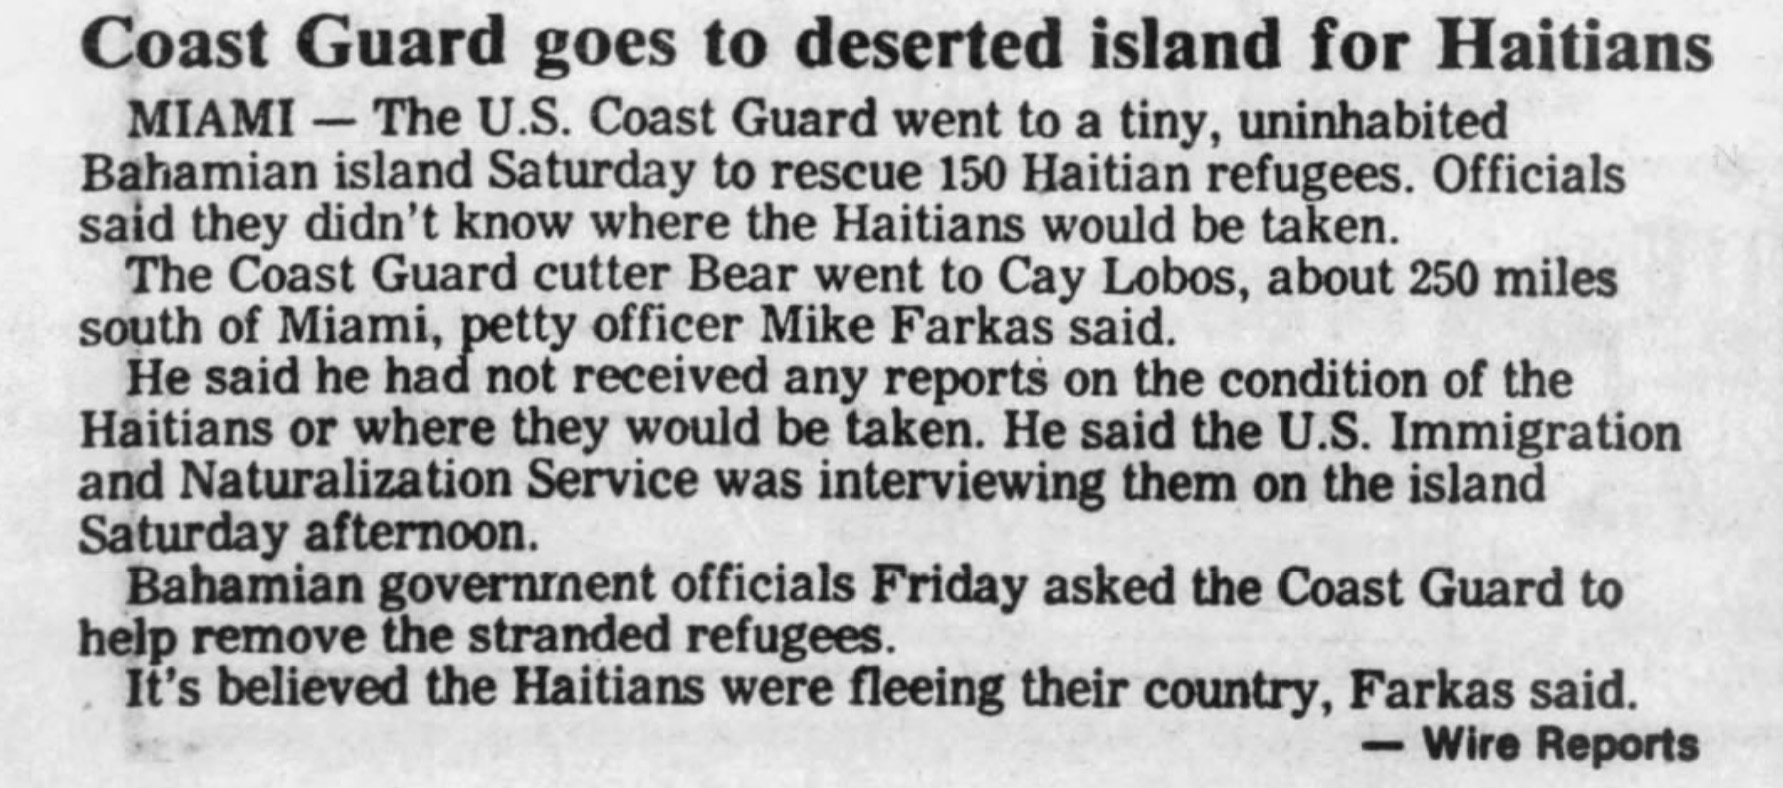 coast guard us u.s. rescue rescued deserted uninhabited island bahama cuba florida